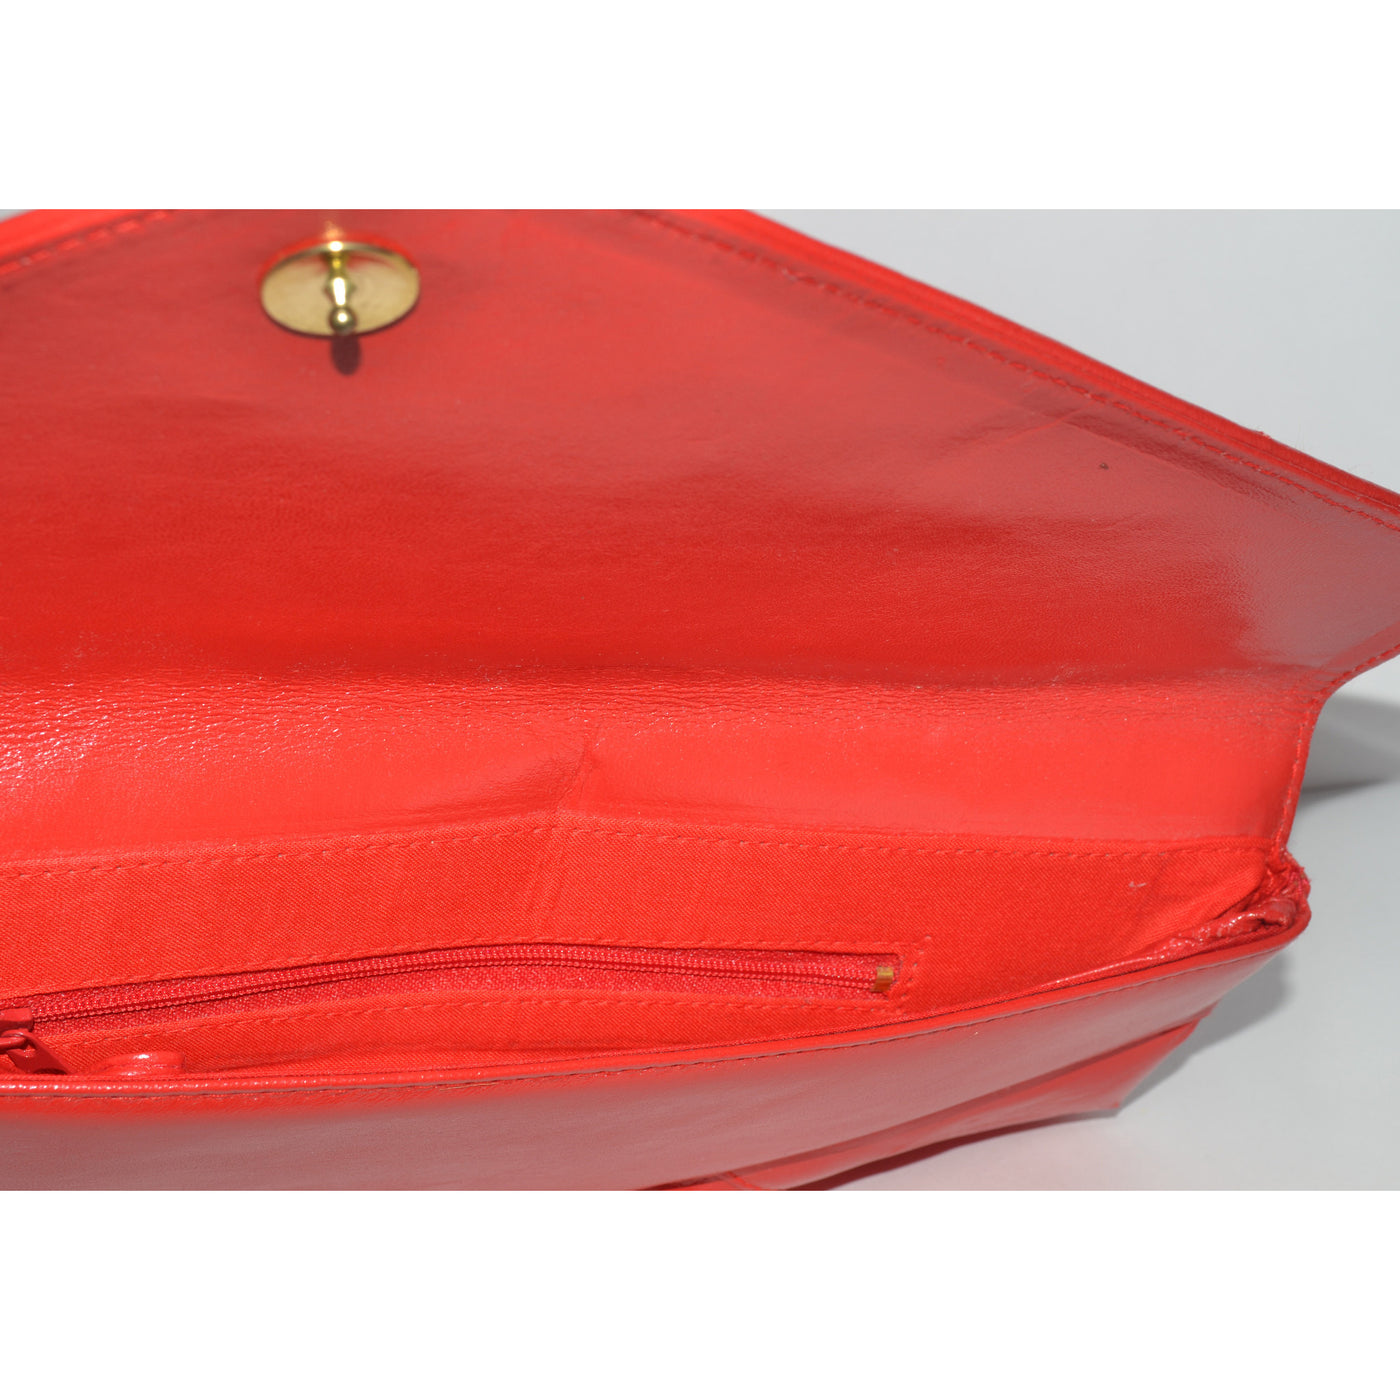 Vintage Red Leather Envelope Clutch Purse